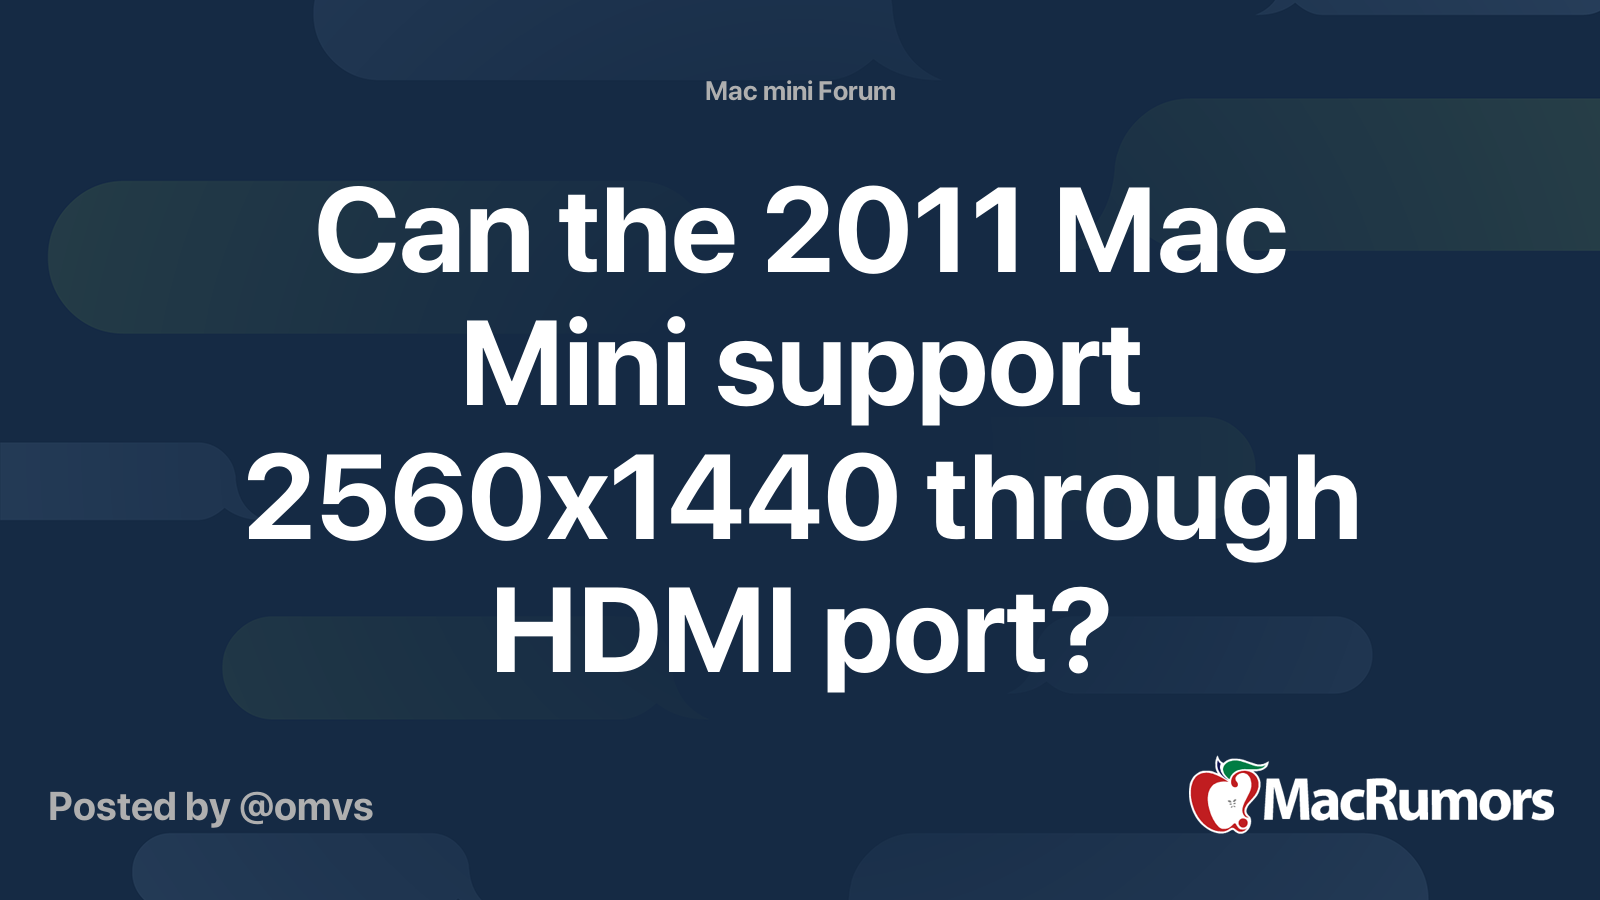 dagsorden essens pædagog Can the 2011 Mac Mini support 2560x1440 through HDMI port? | MacRumors  Forums